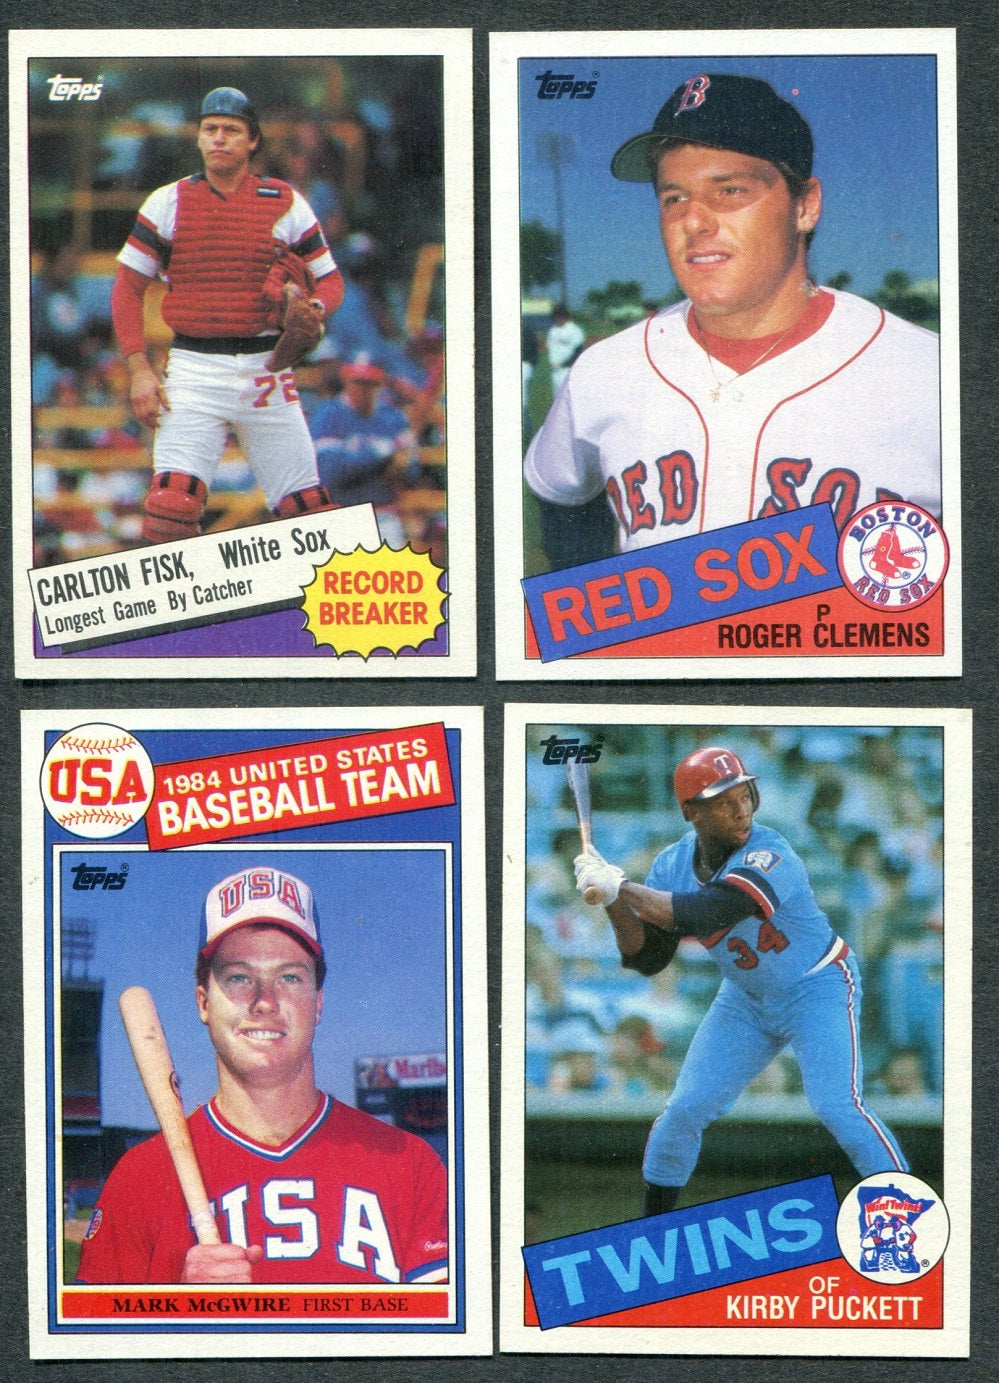 1985 Topps Baseball Complete Set NM NM/MT (792) (23-219)